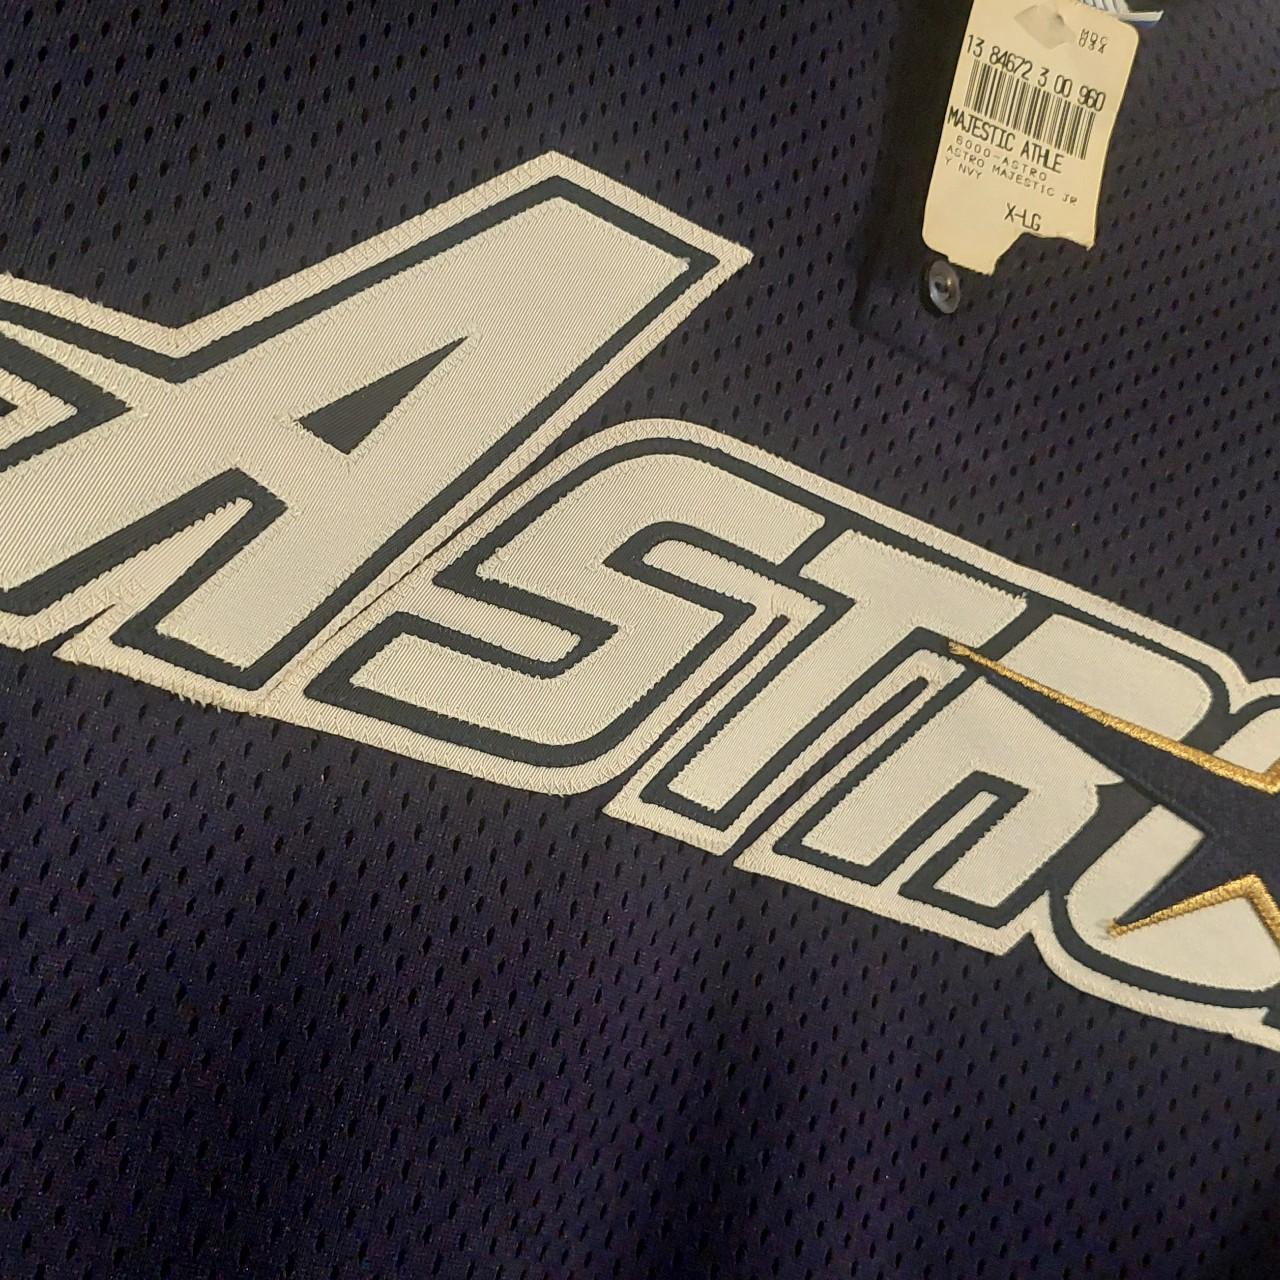 Majestic Houston Astros Dad T-shirt - slight smear - Depop